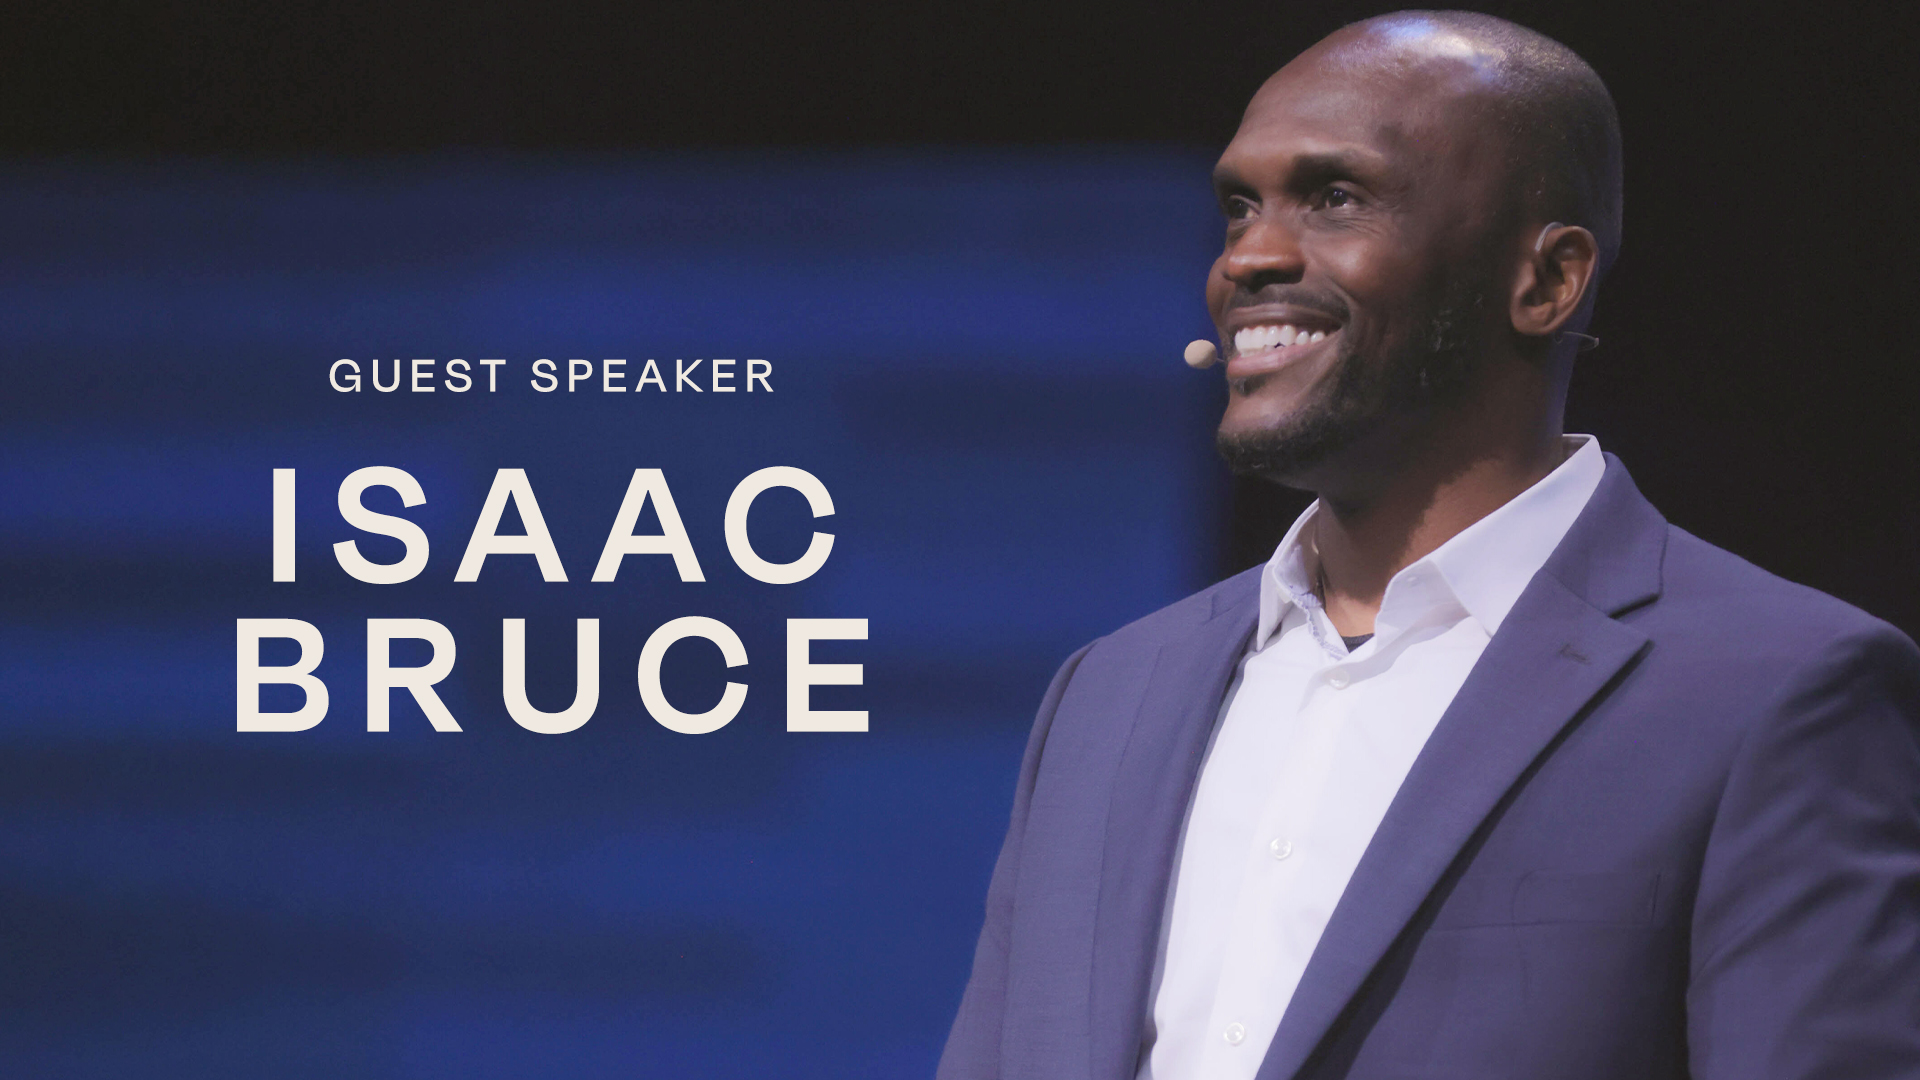 Isaac Bruce to speak at FCA breakfast